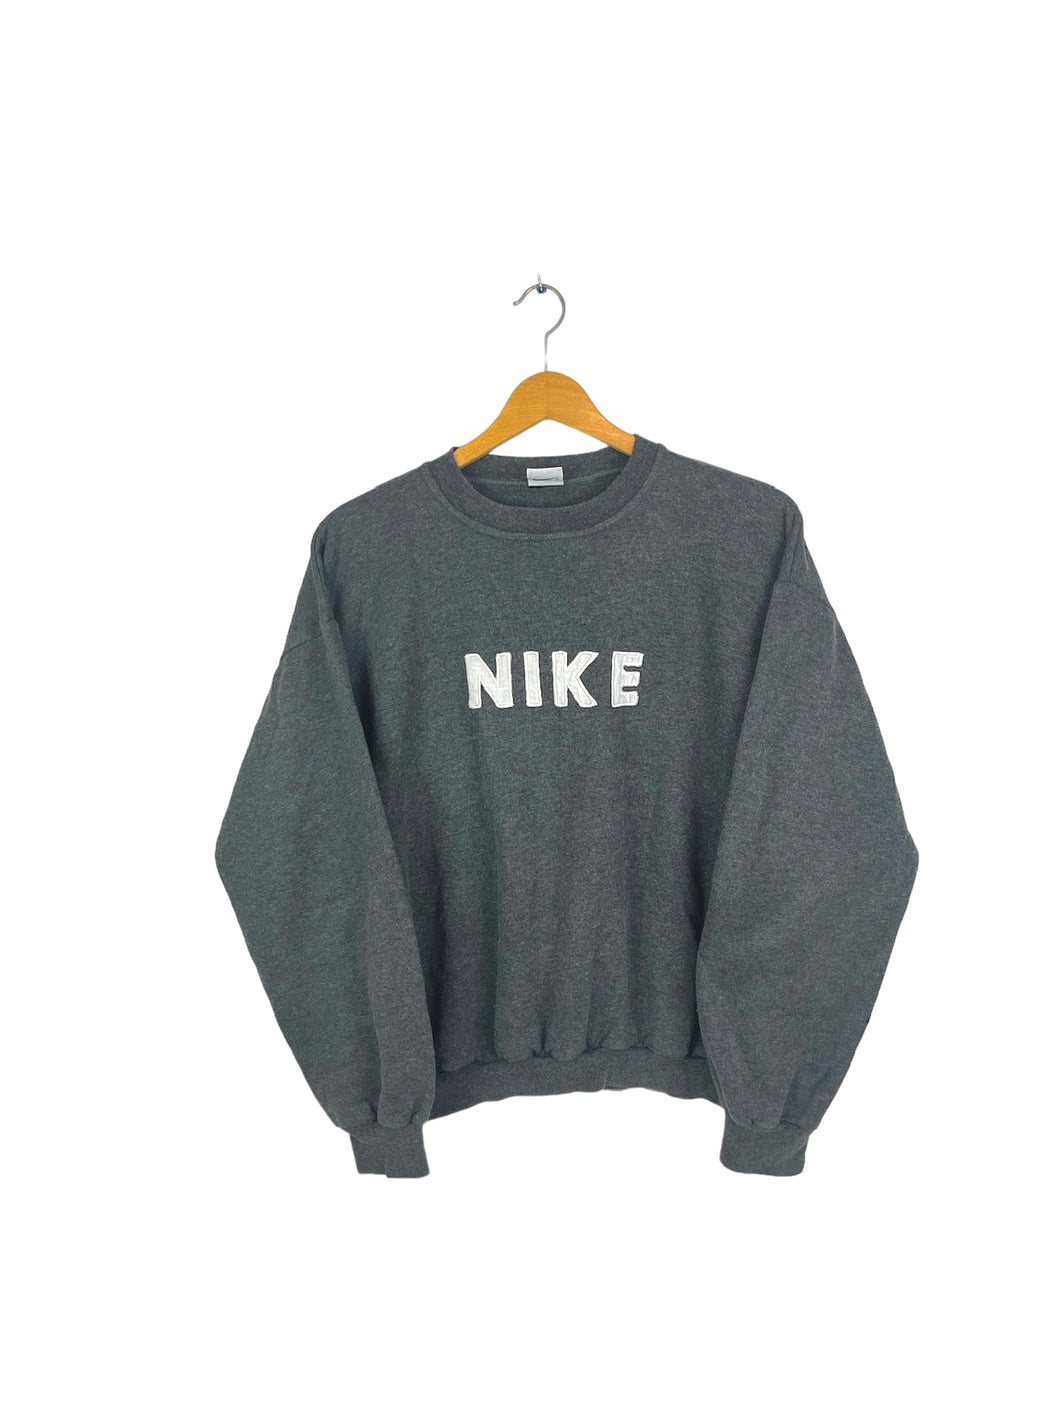 Nike Bootleg Sweatshirt - Medium